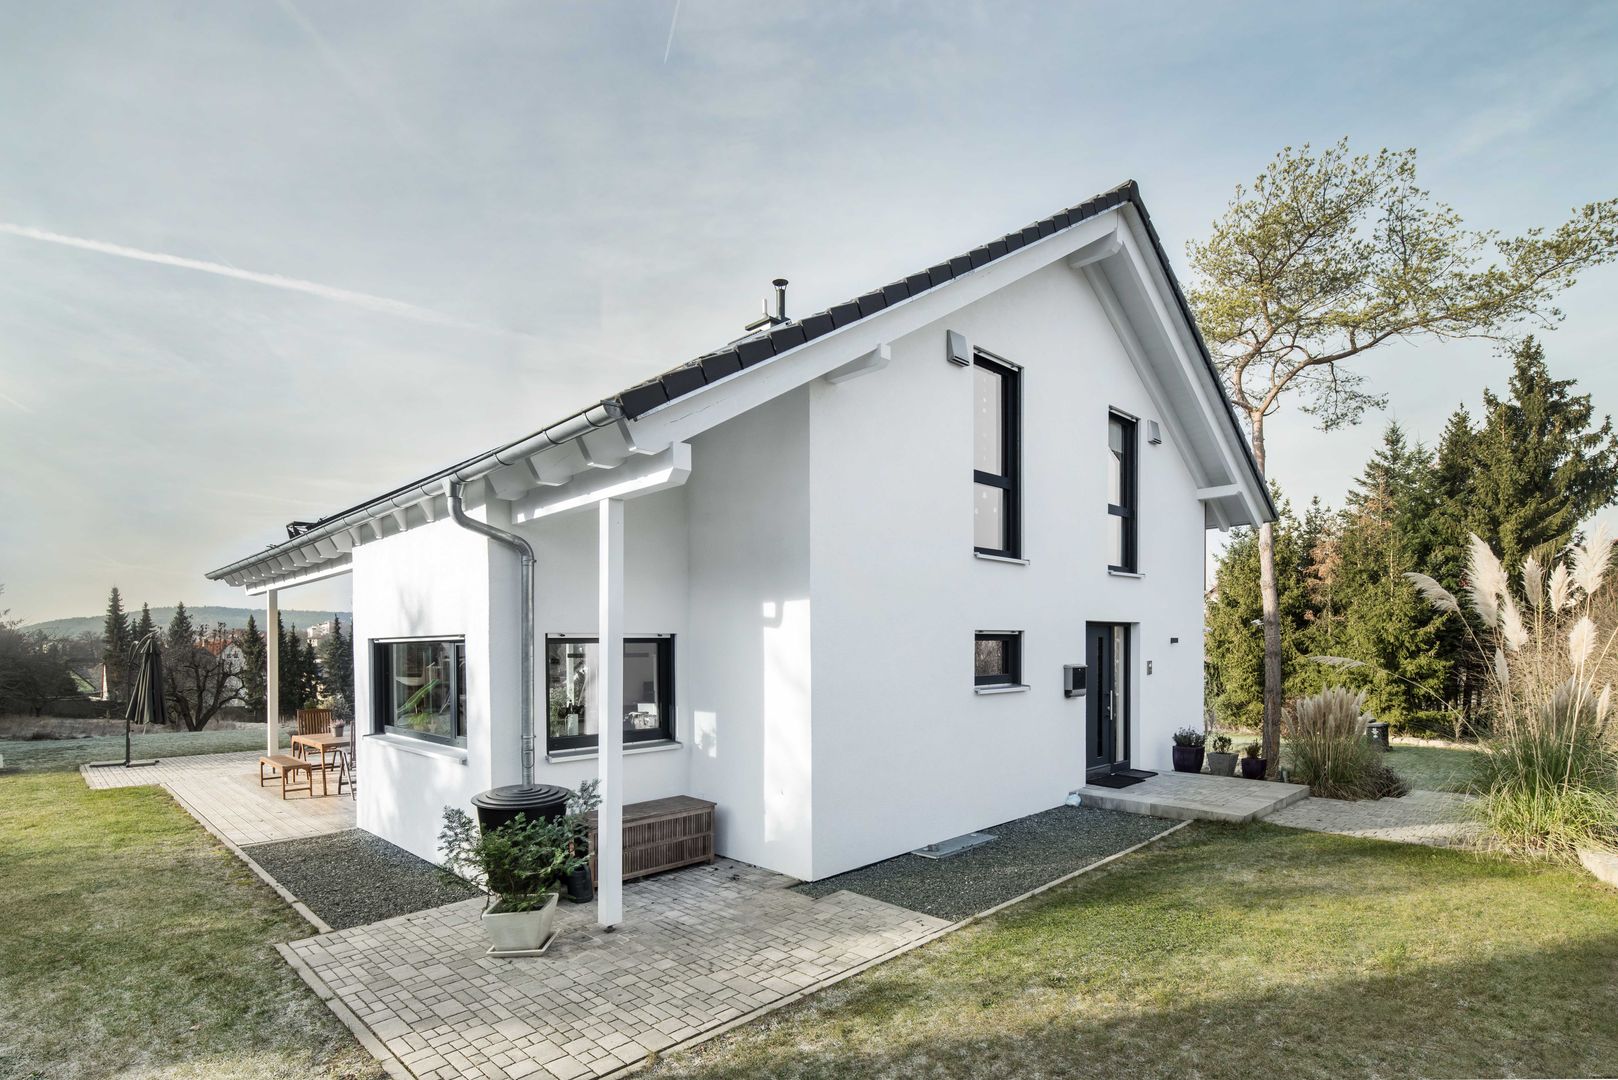 Klassik trifft Moderne, wir leben haus - Bauunternehmen in Bayern wir leben haus - Bauunternehmen in Bayern Single family home